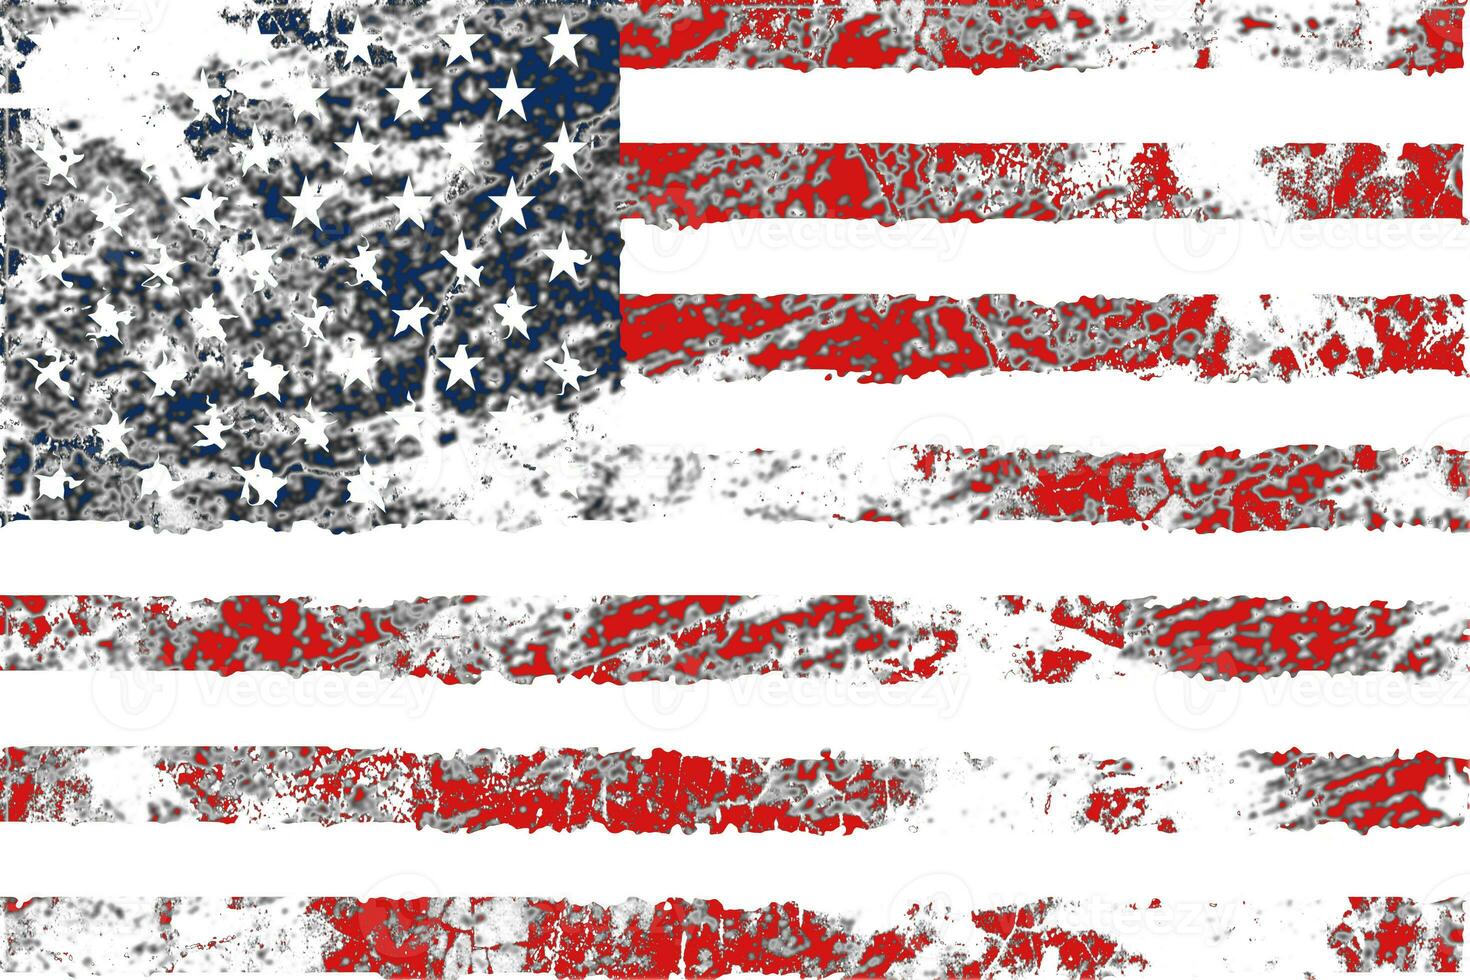 Grunge of American flag background photo